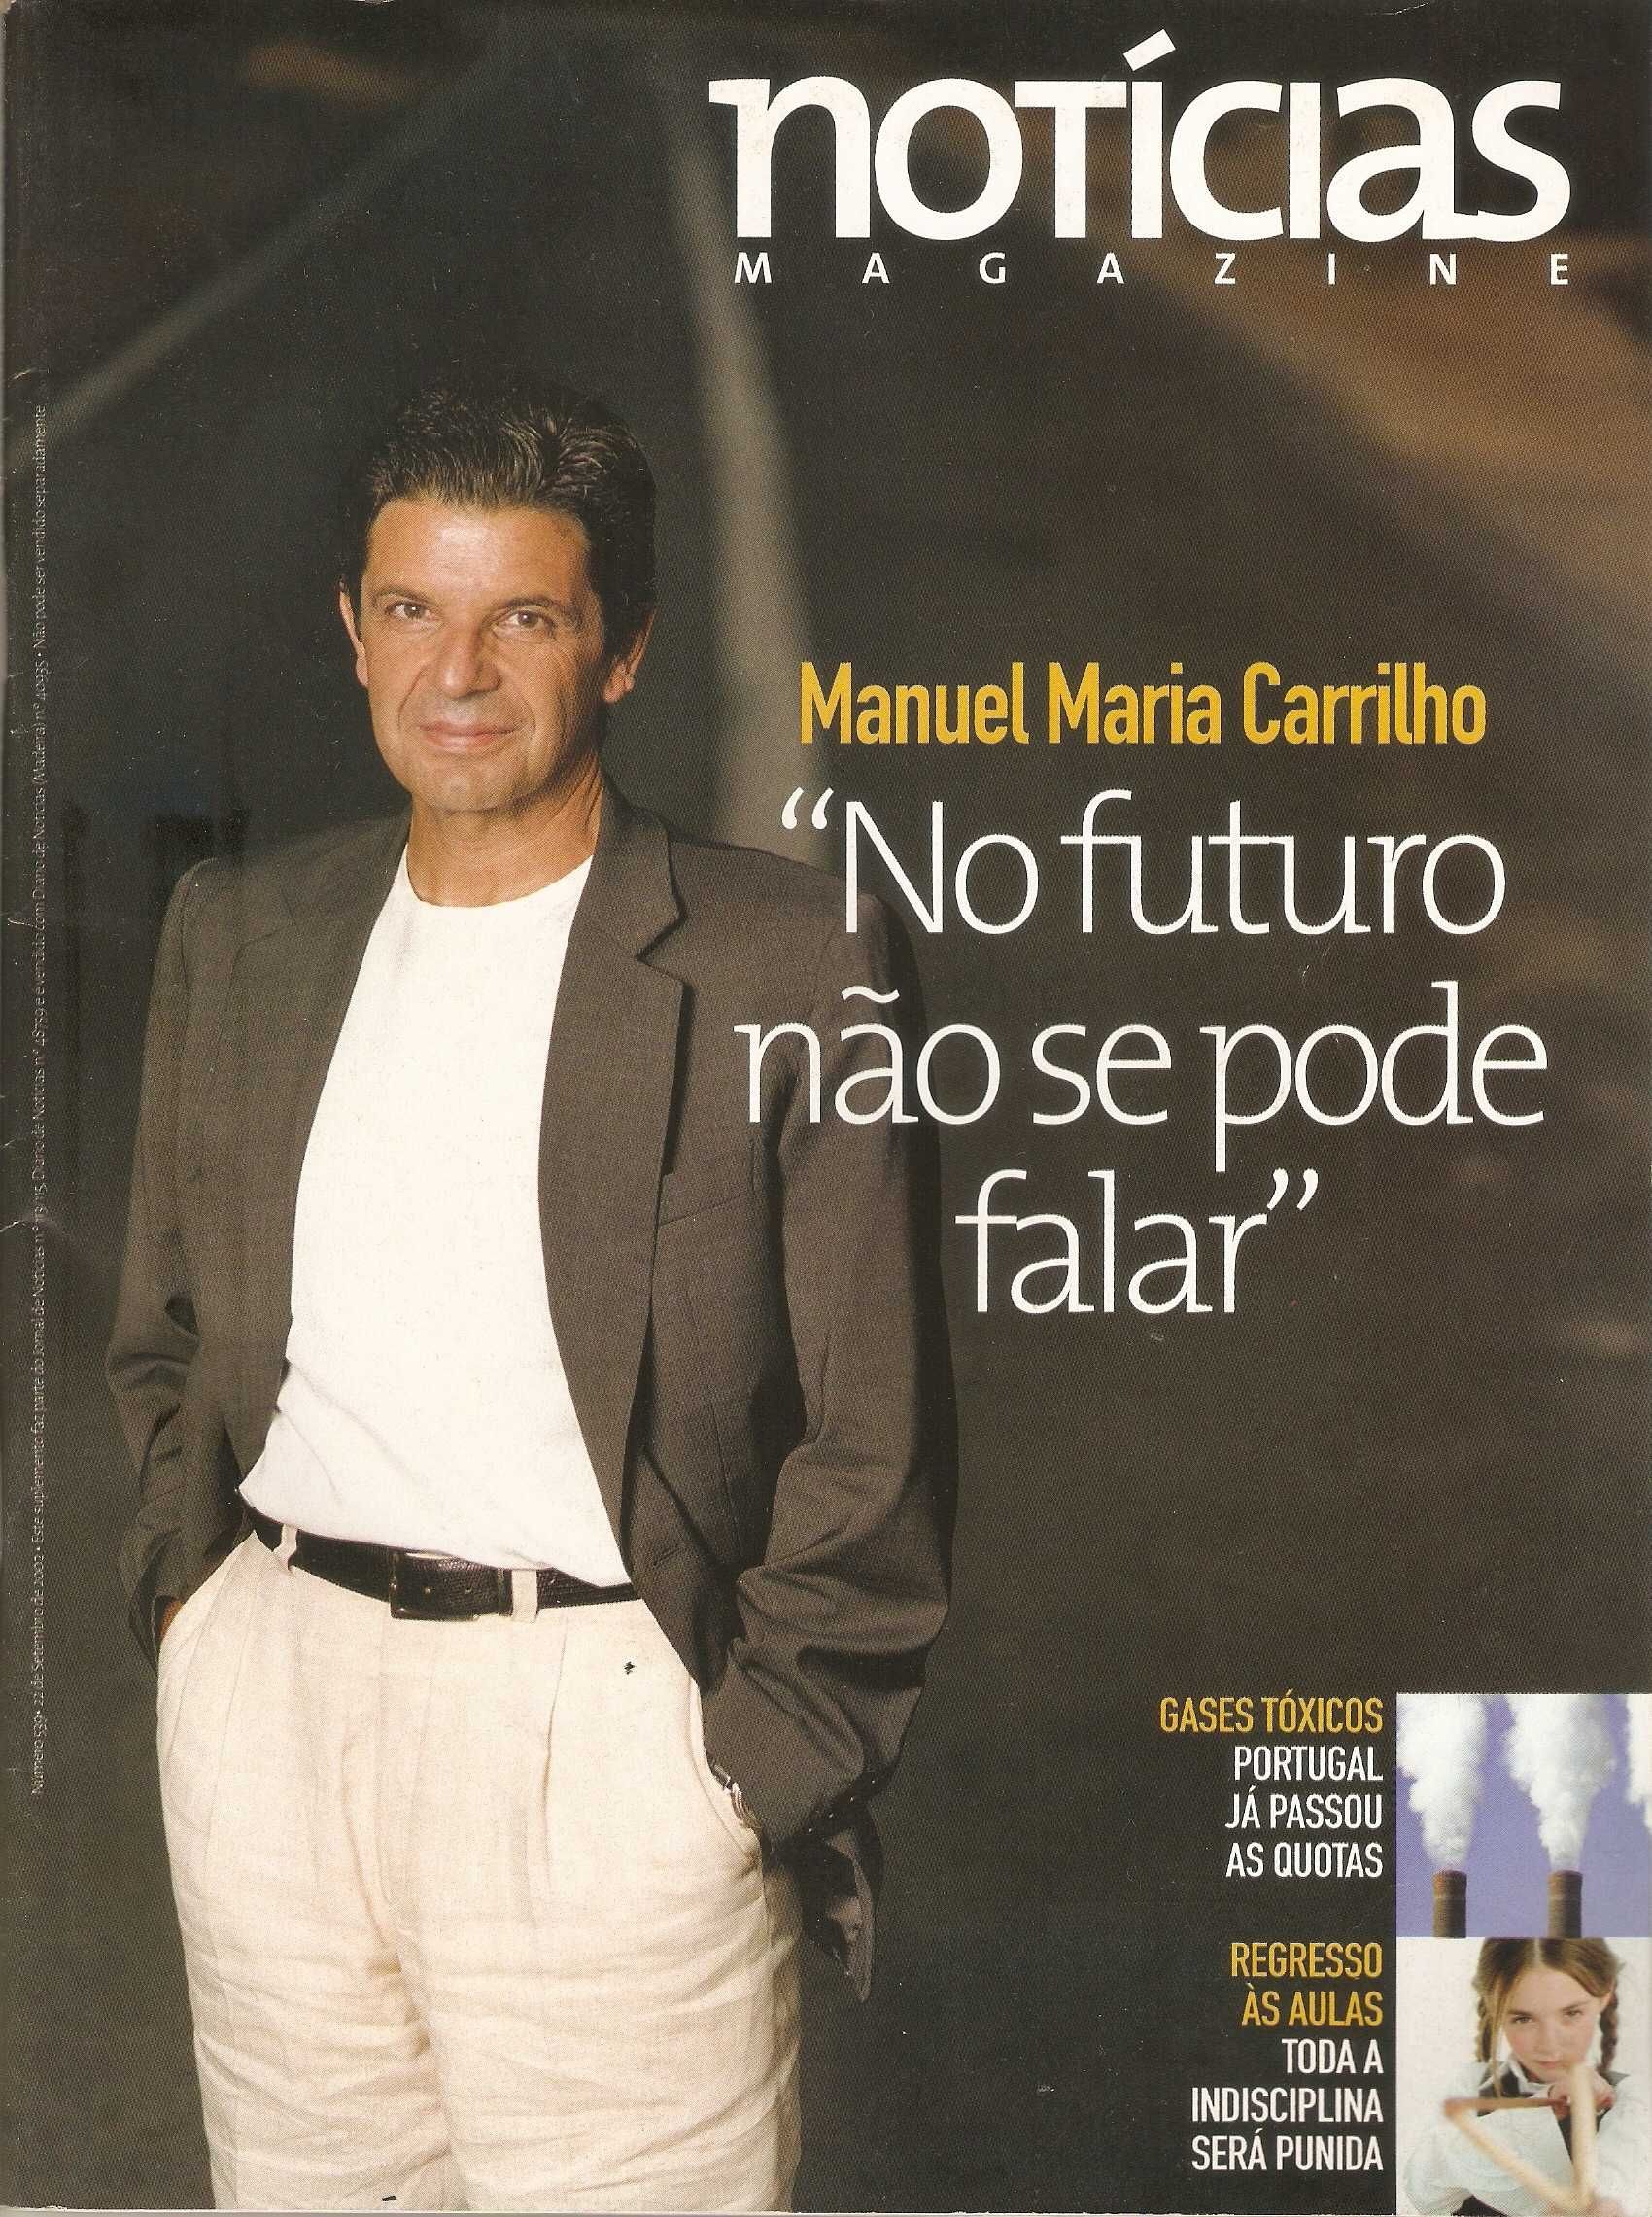 Manuel Maria Carrilho na capa da revista 2002